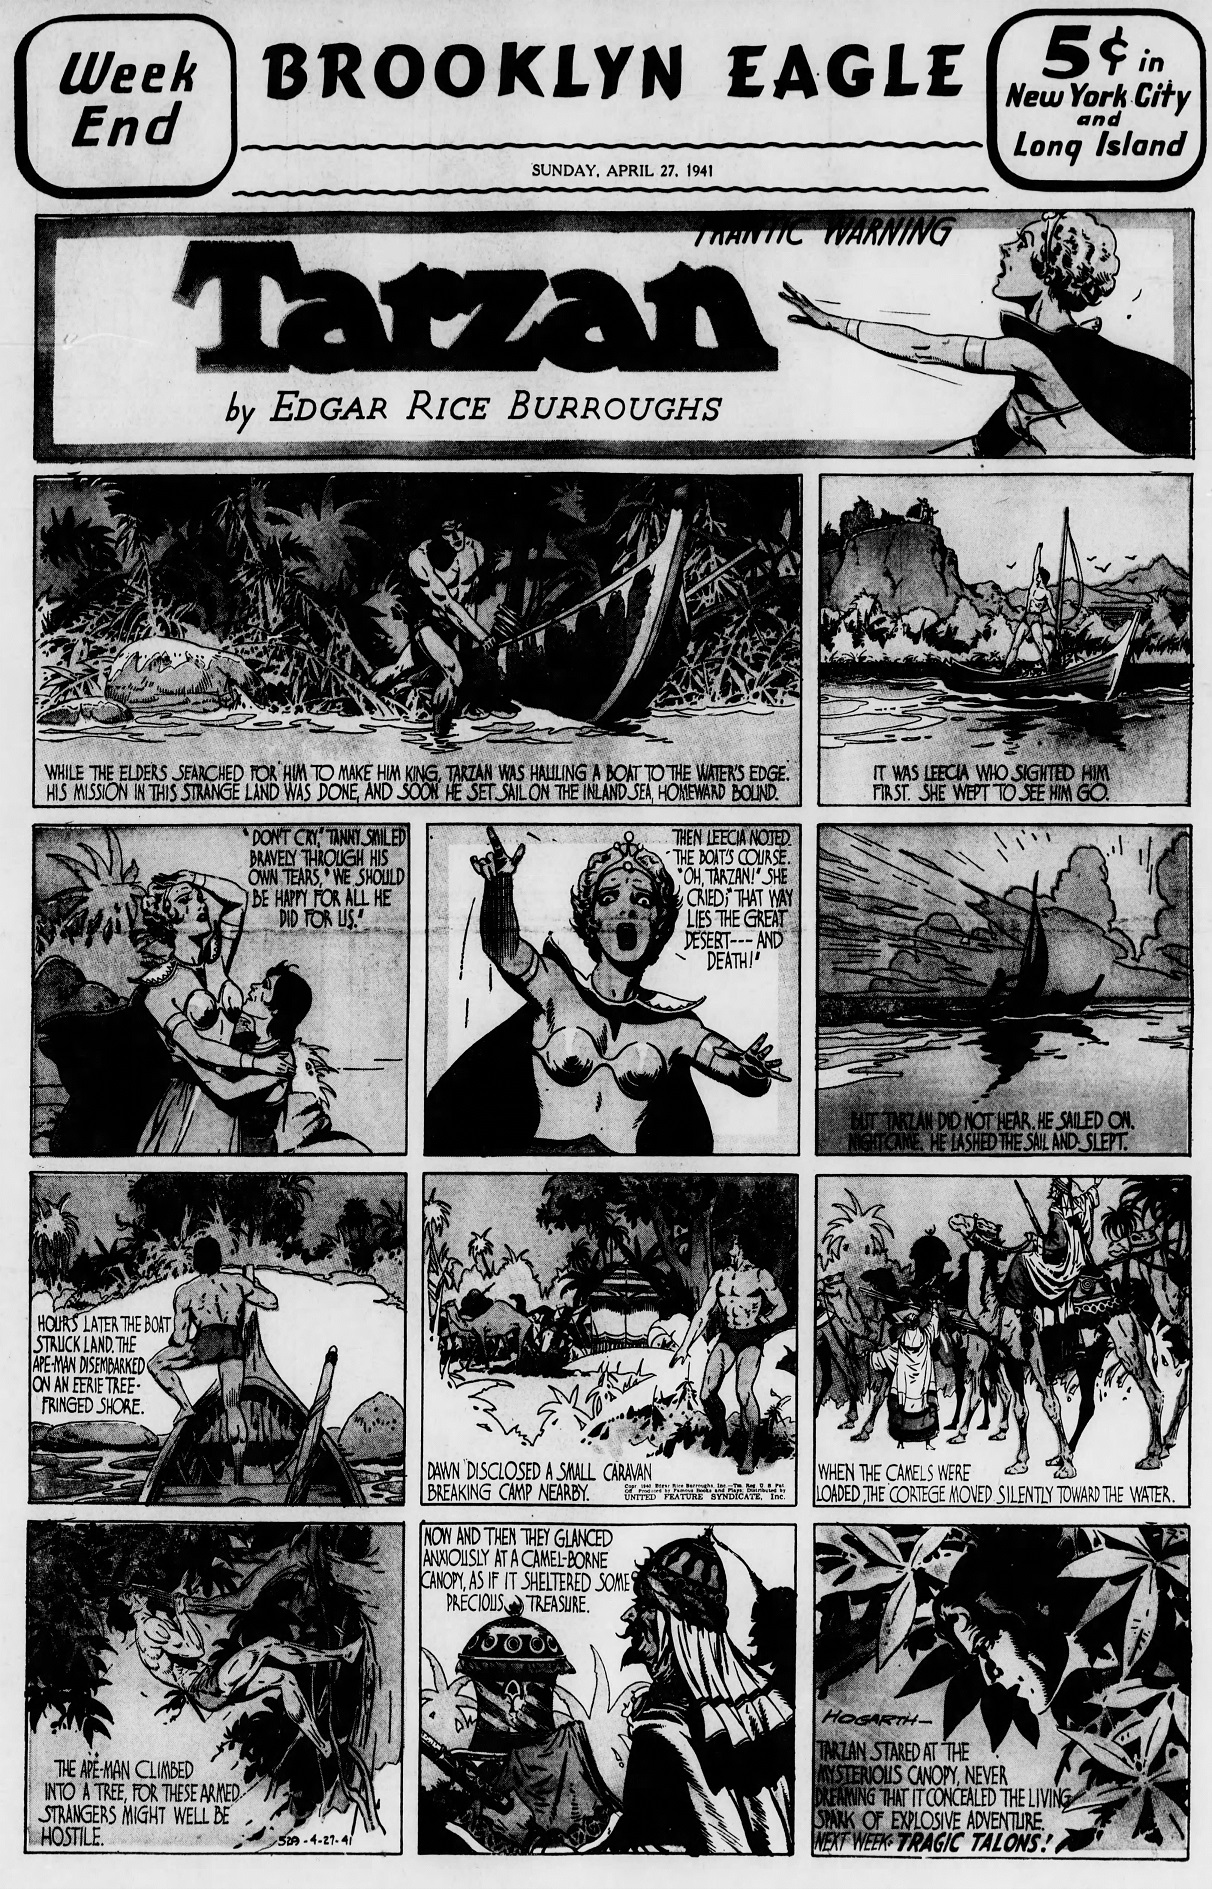 The_Brooklyn_Daily_Eagle_Sun__Apr_27__1941_(3).jpg